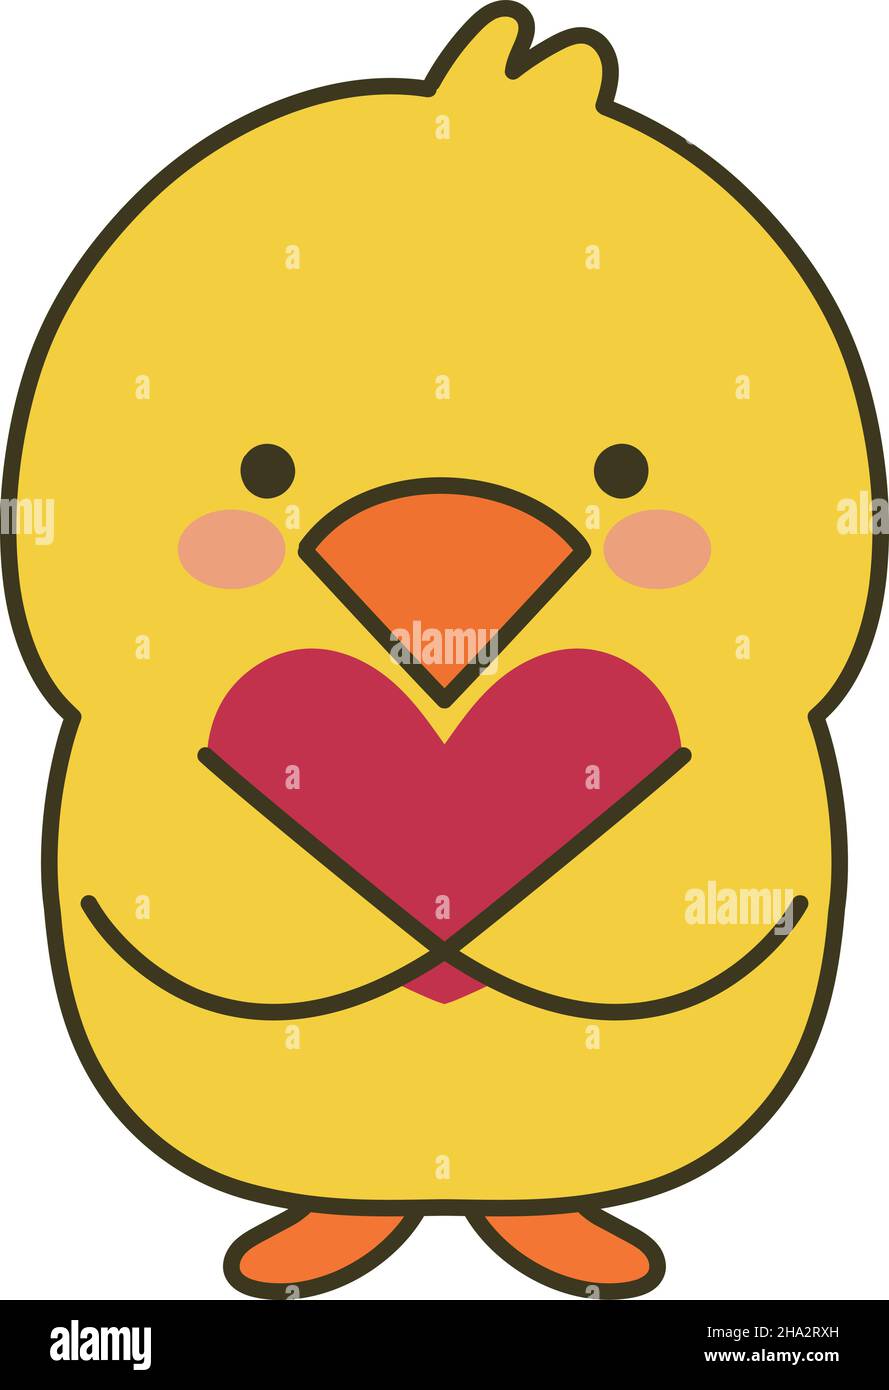 Tweety Bird. Cartoon. Kiss-cut Stickers. Bird. Yellow. Gift. Scrapbooking.  -  Canada